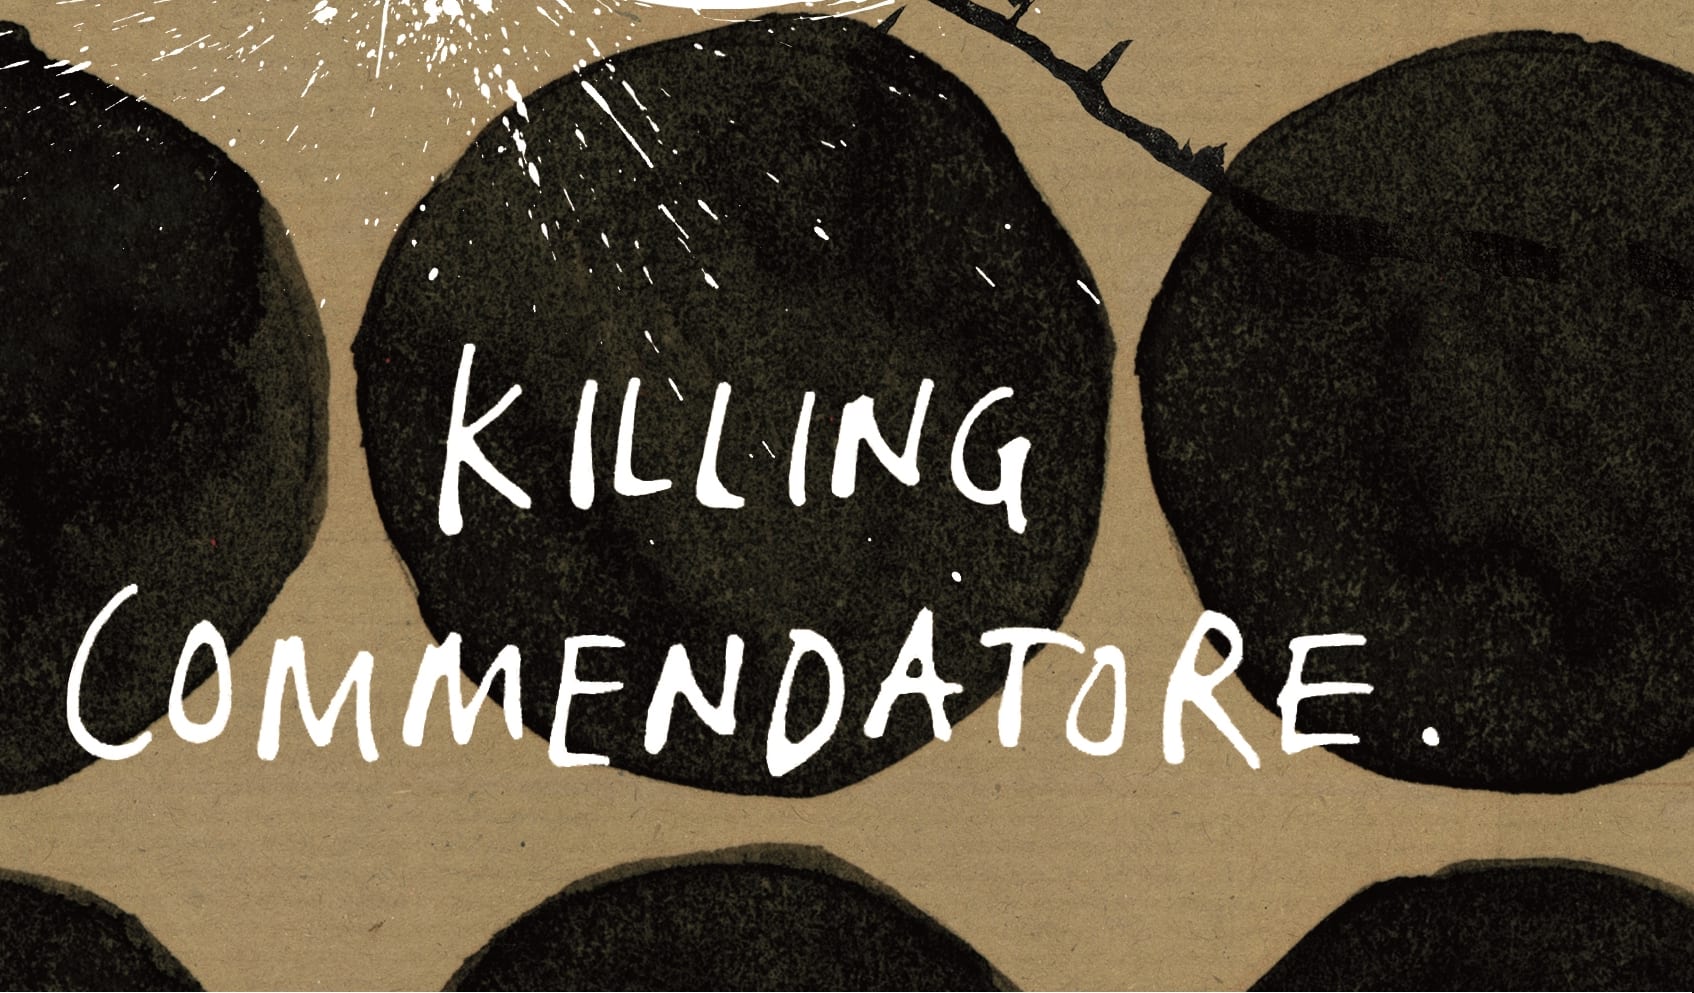 cover of the book "Killing Commendatore" by Haruki Murakami